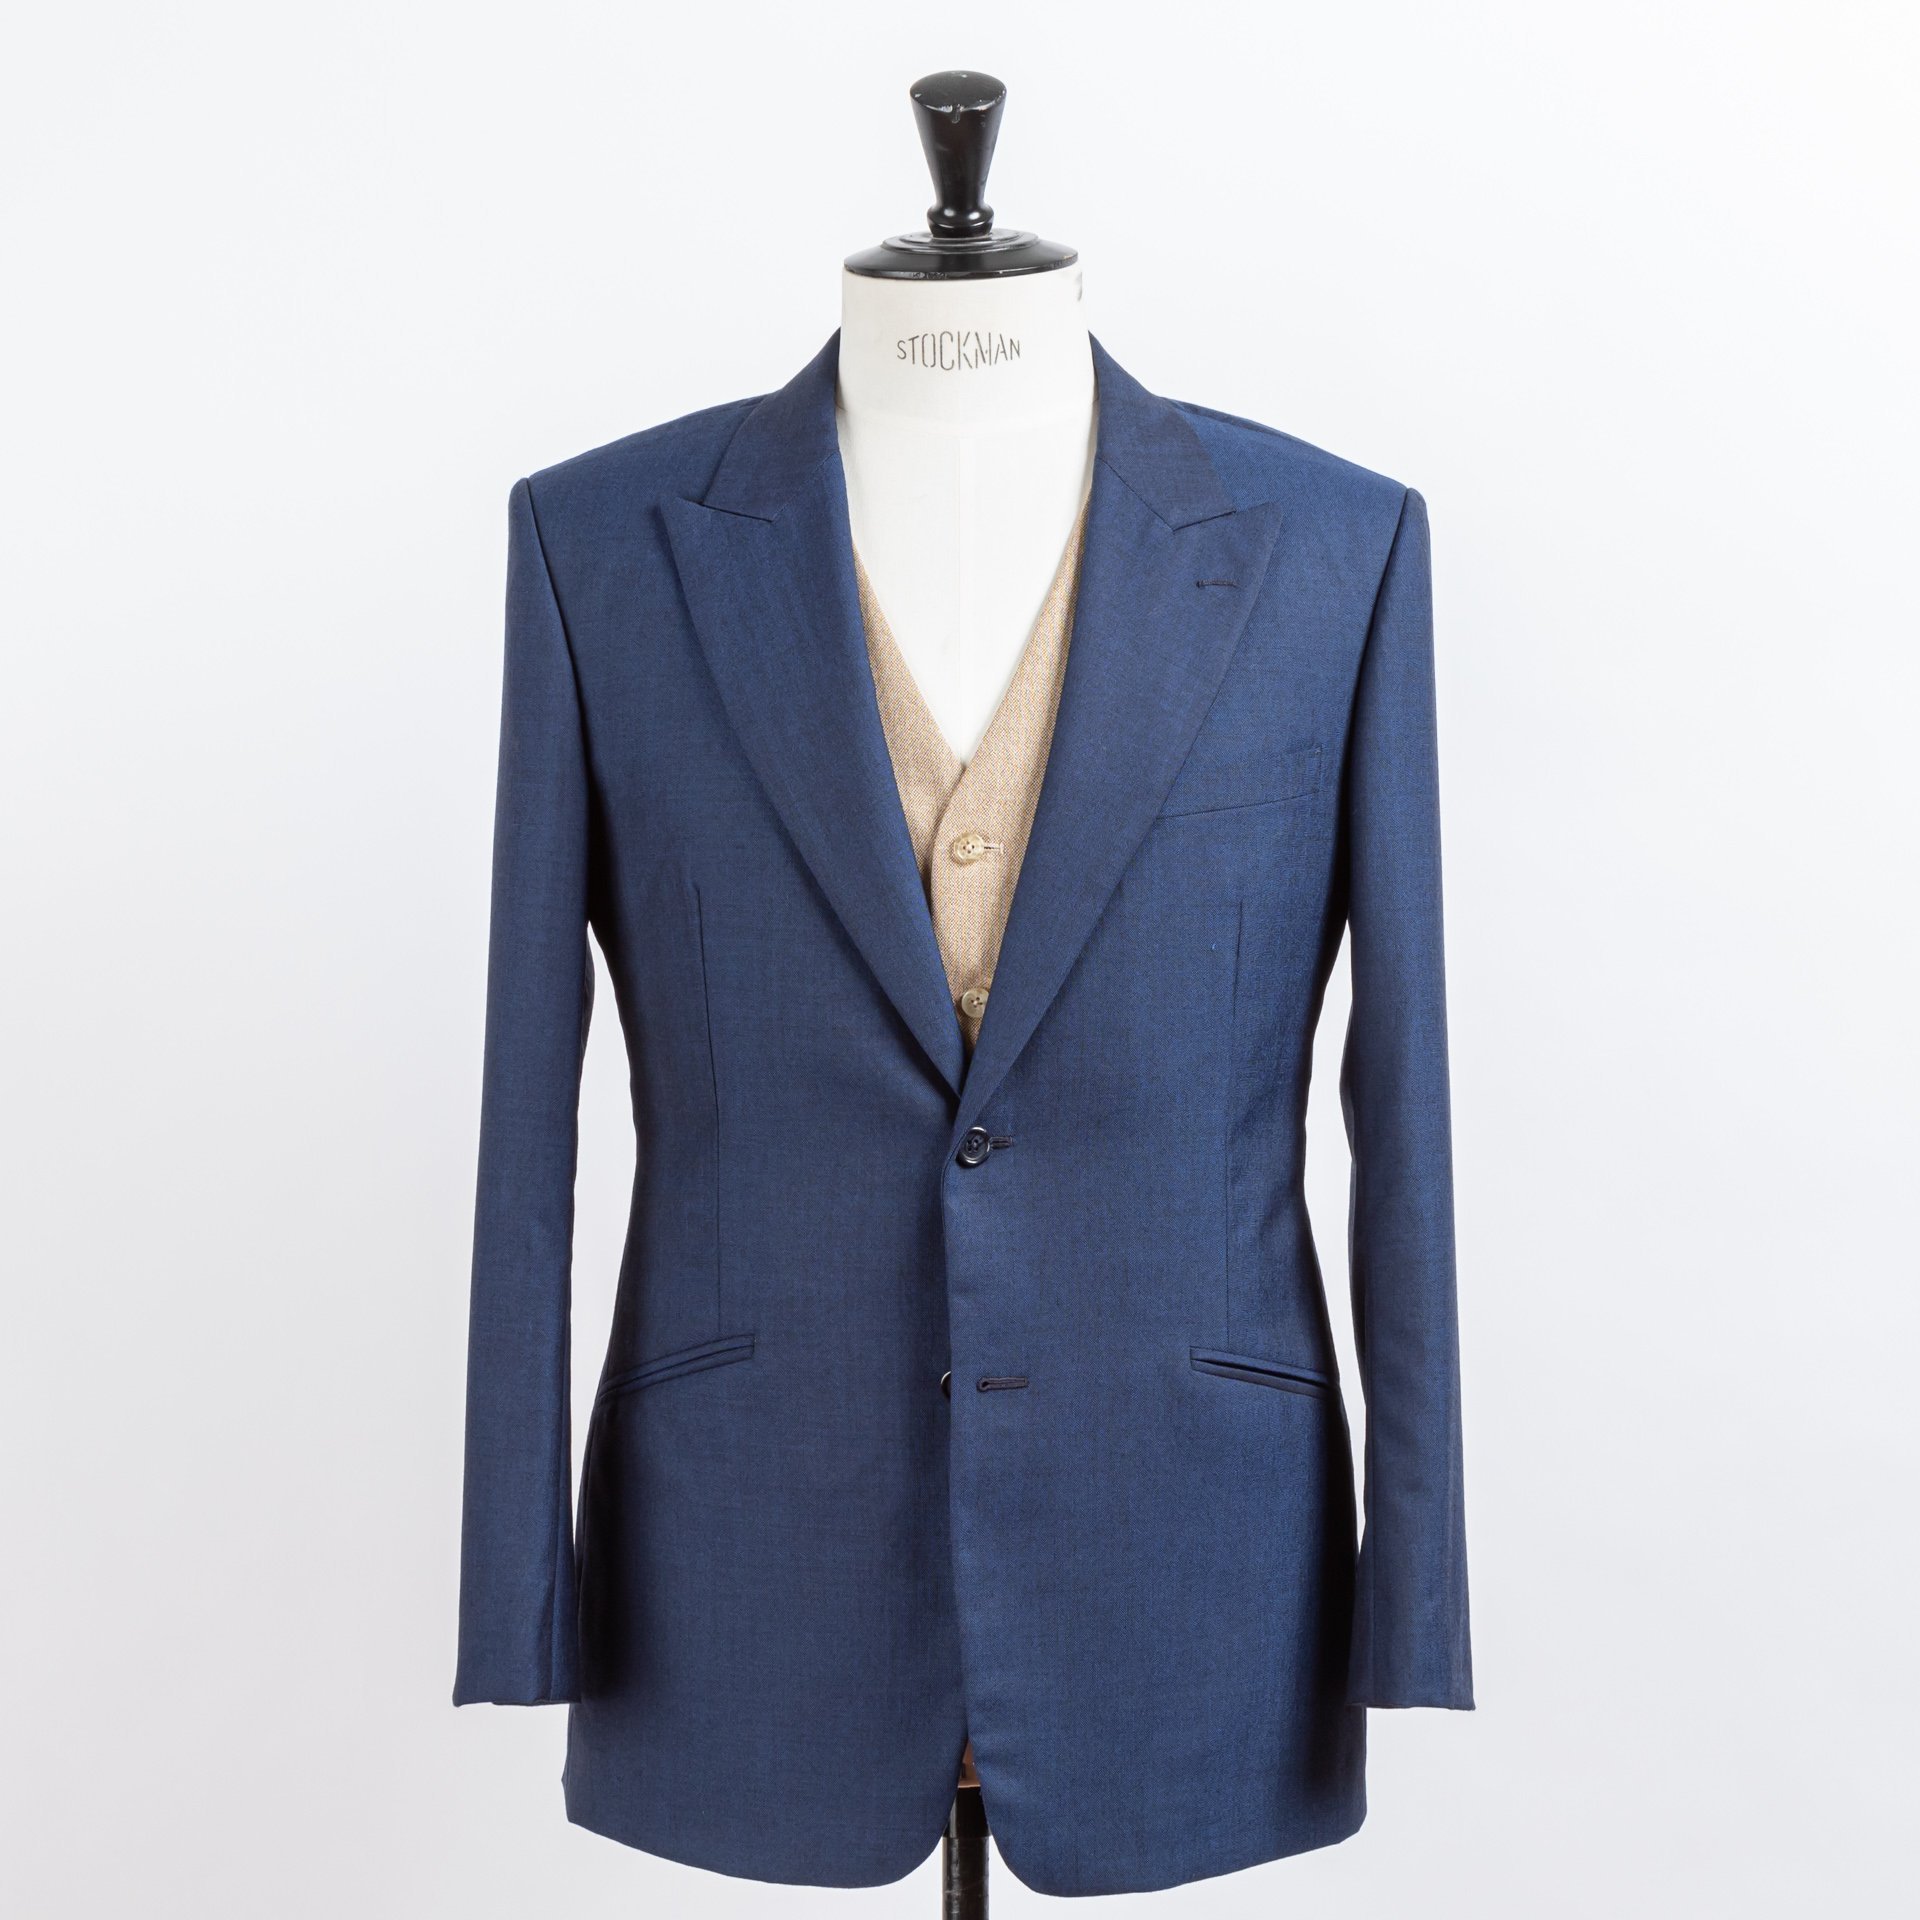 Bespoke Suit Blue with Waistcoat